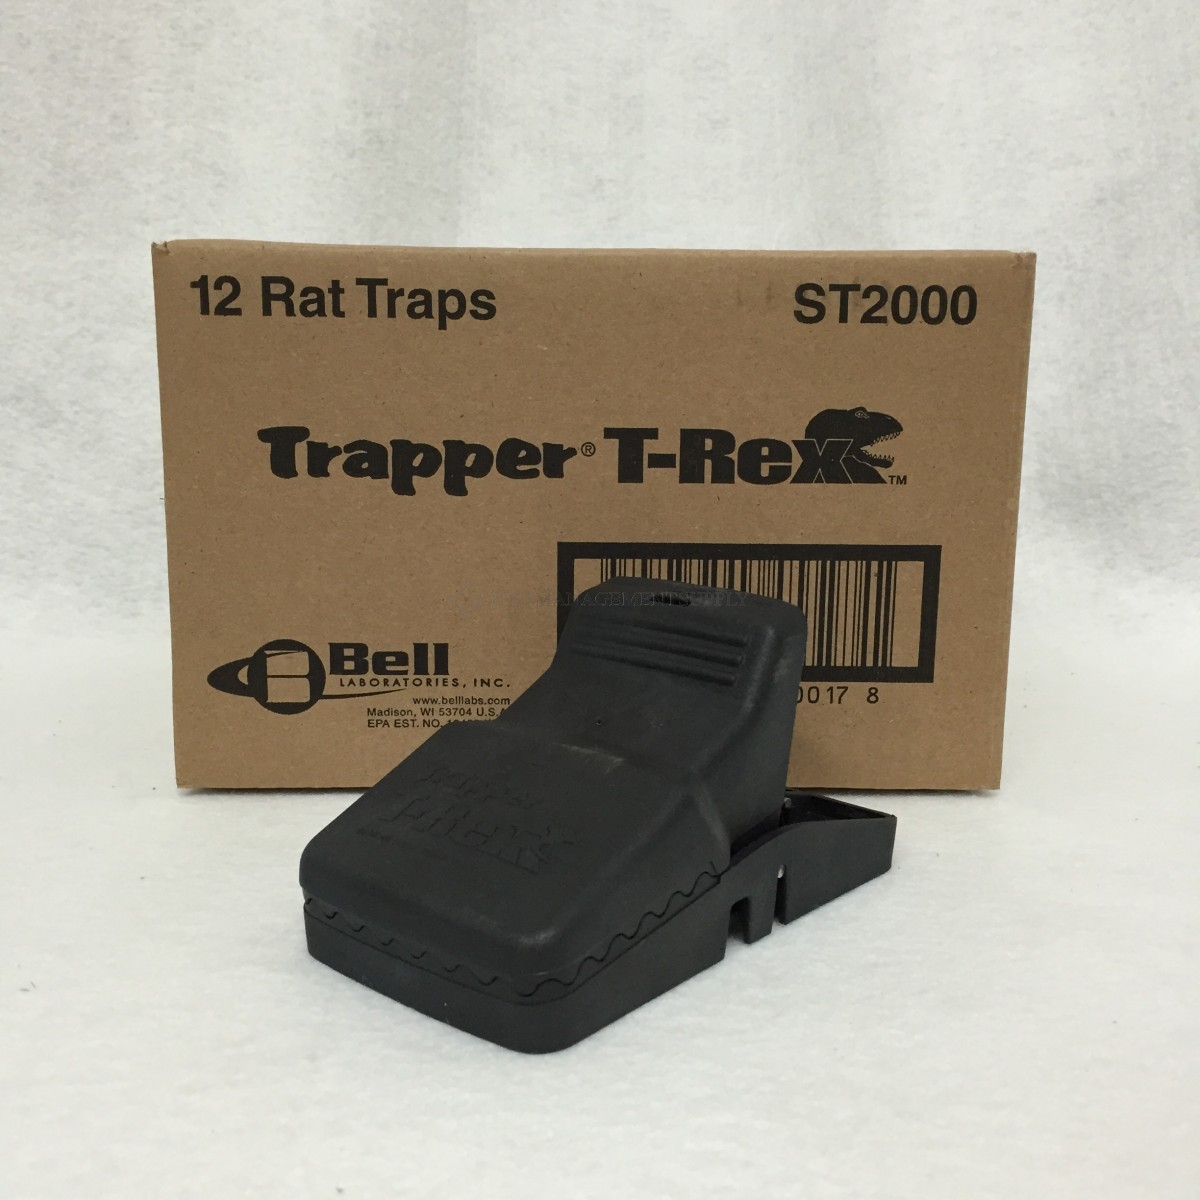 https://turfandpest.com/wp-content/uploads/2021/06/trapper-t-rex-rat-snap.jpg